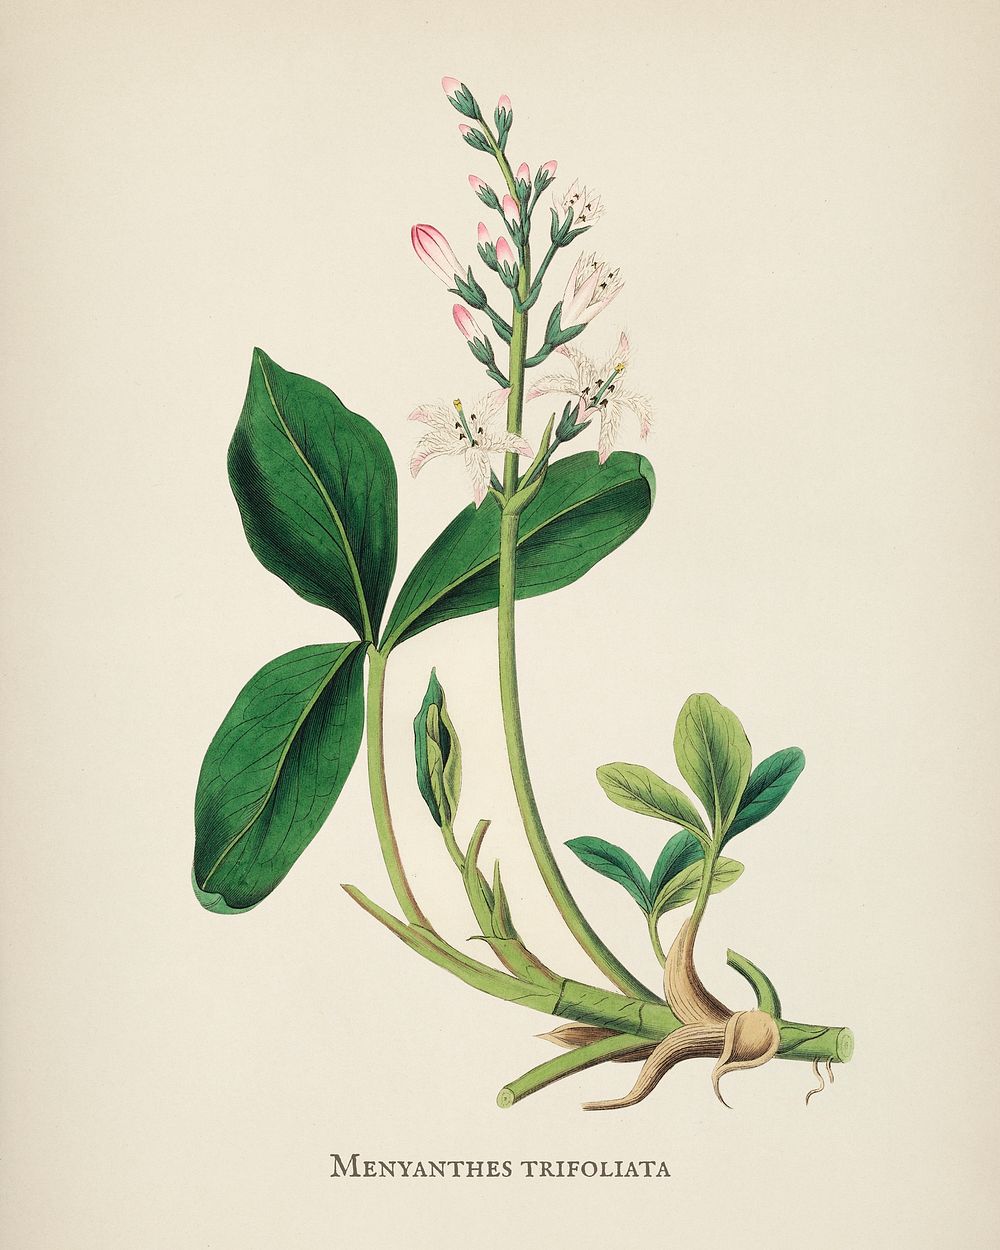 Bogbean (Menyanthes trifoliata) illustration from Medical Botany (1836) by John Stephenson and James Morss Churchill.